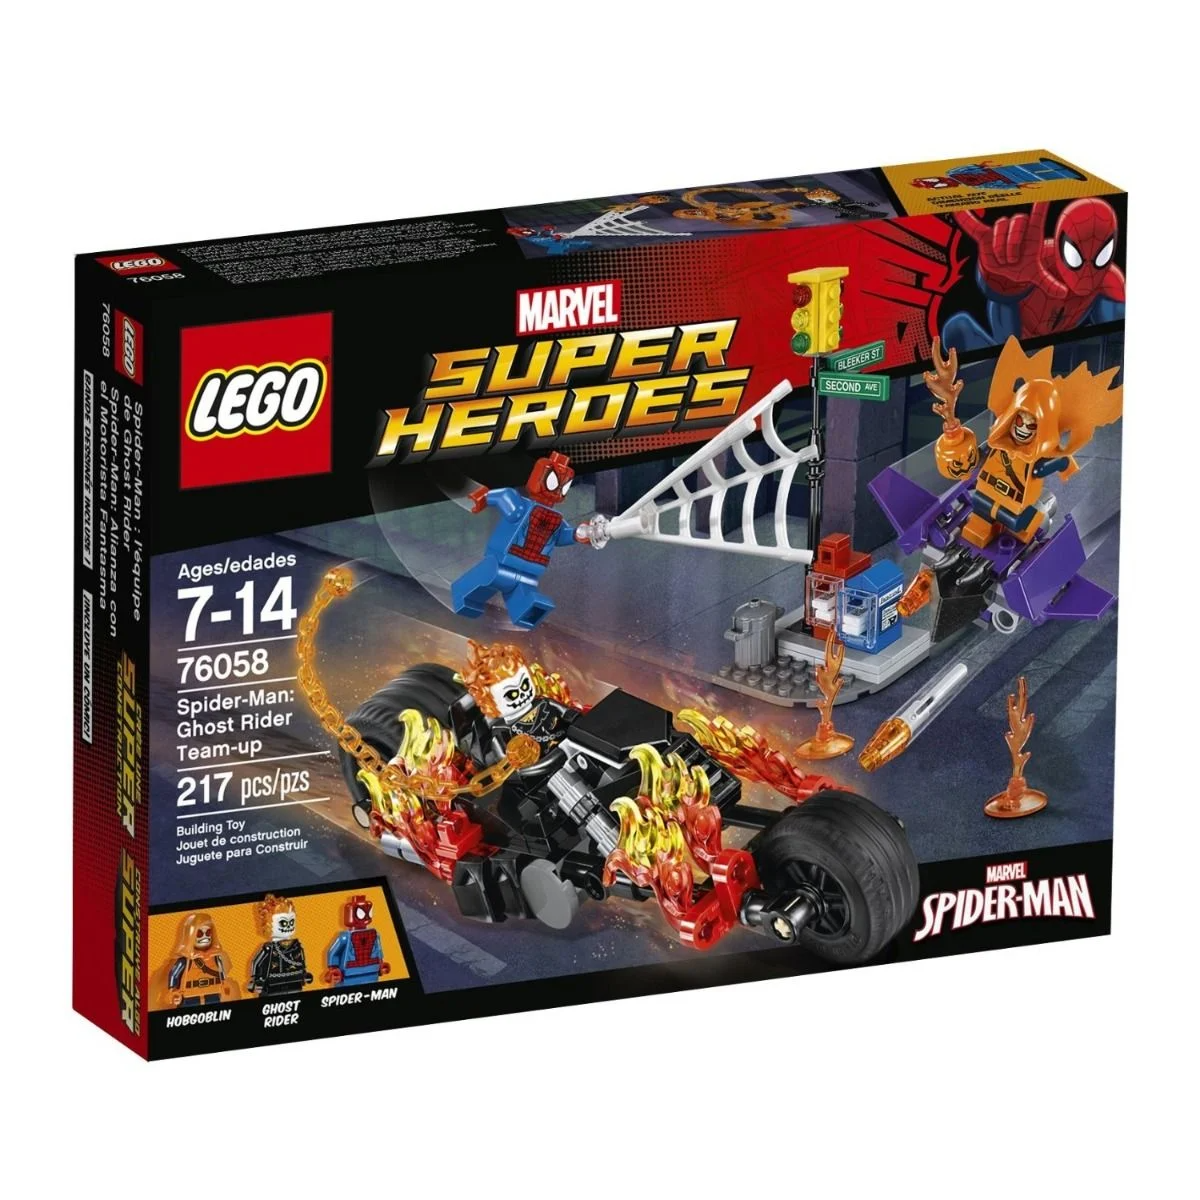 LEGO Marvel Super Heroes Ghost Rider Team-up